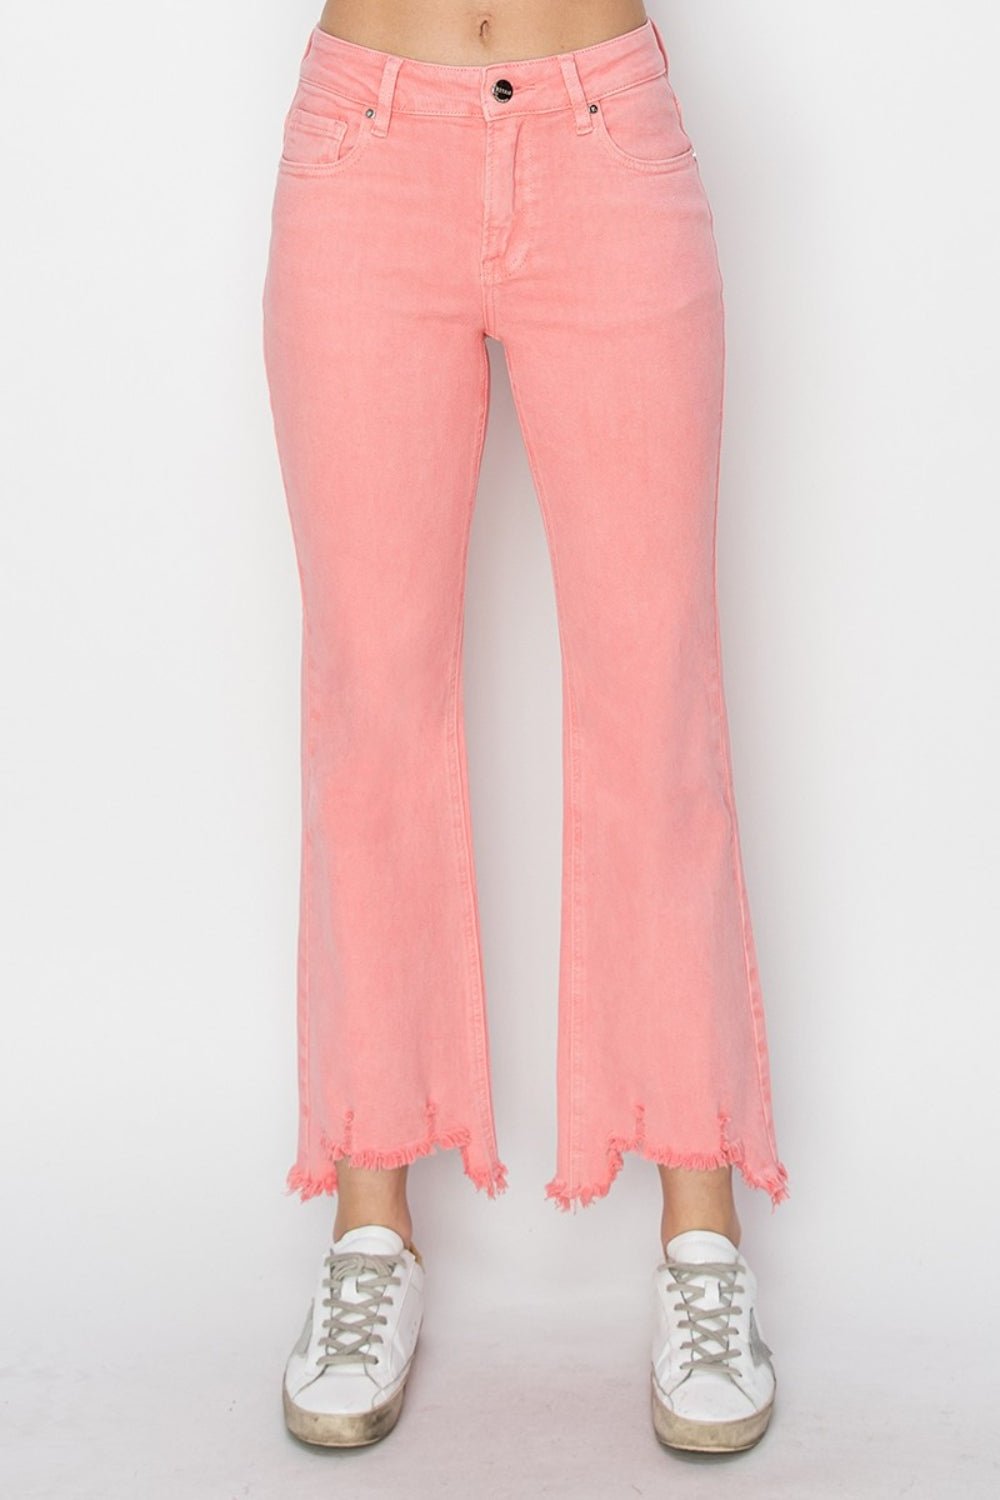 Raw Hem Bootcut Jeans in FlamingoJeansRISEN